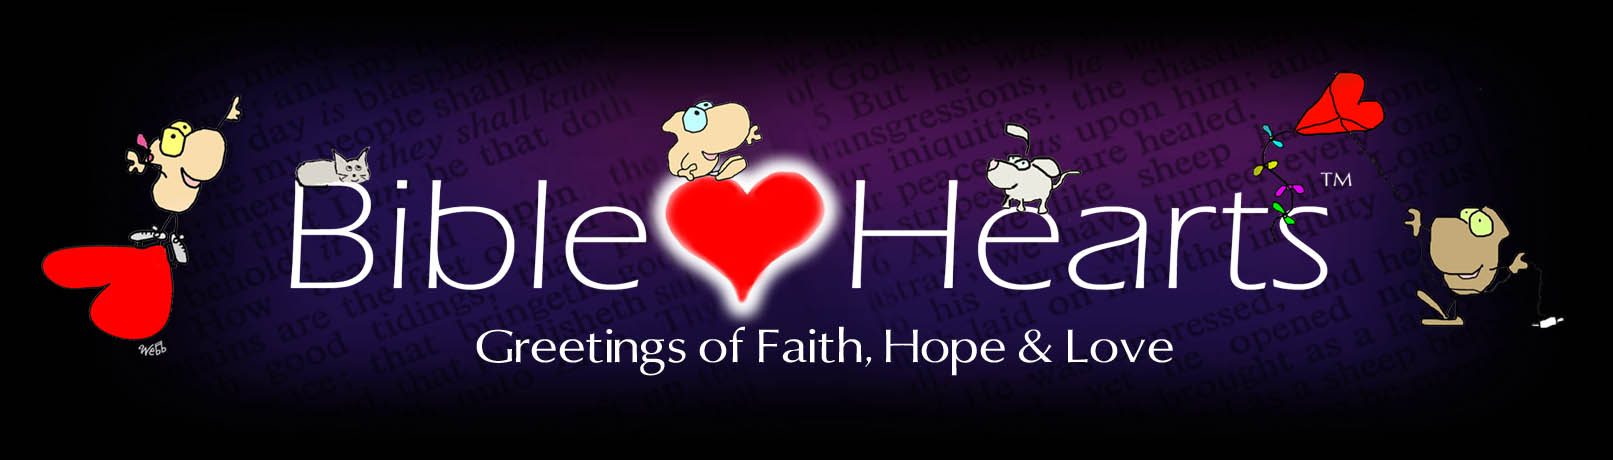 BibleHearts homepage logo